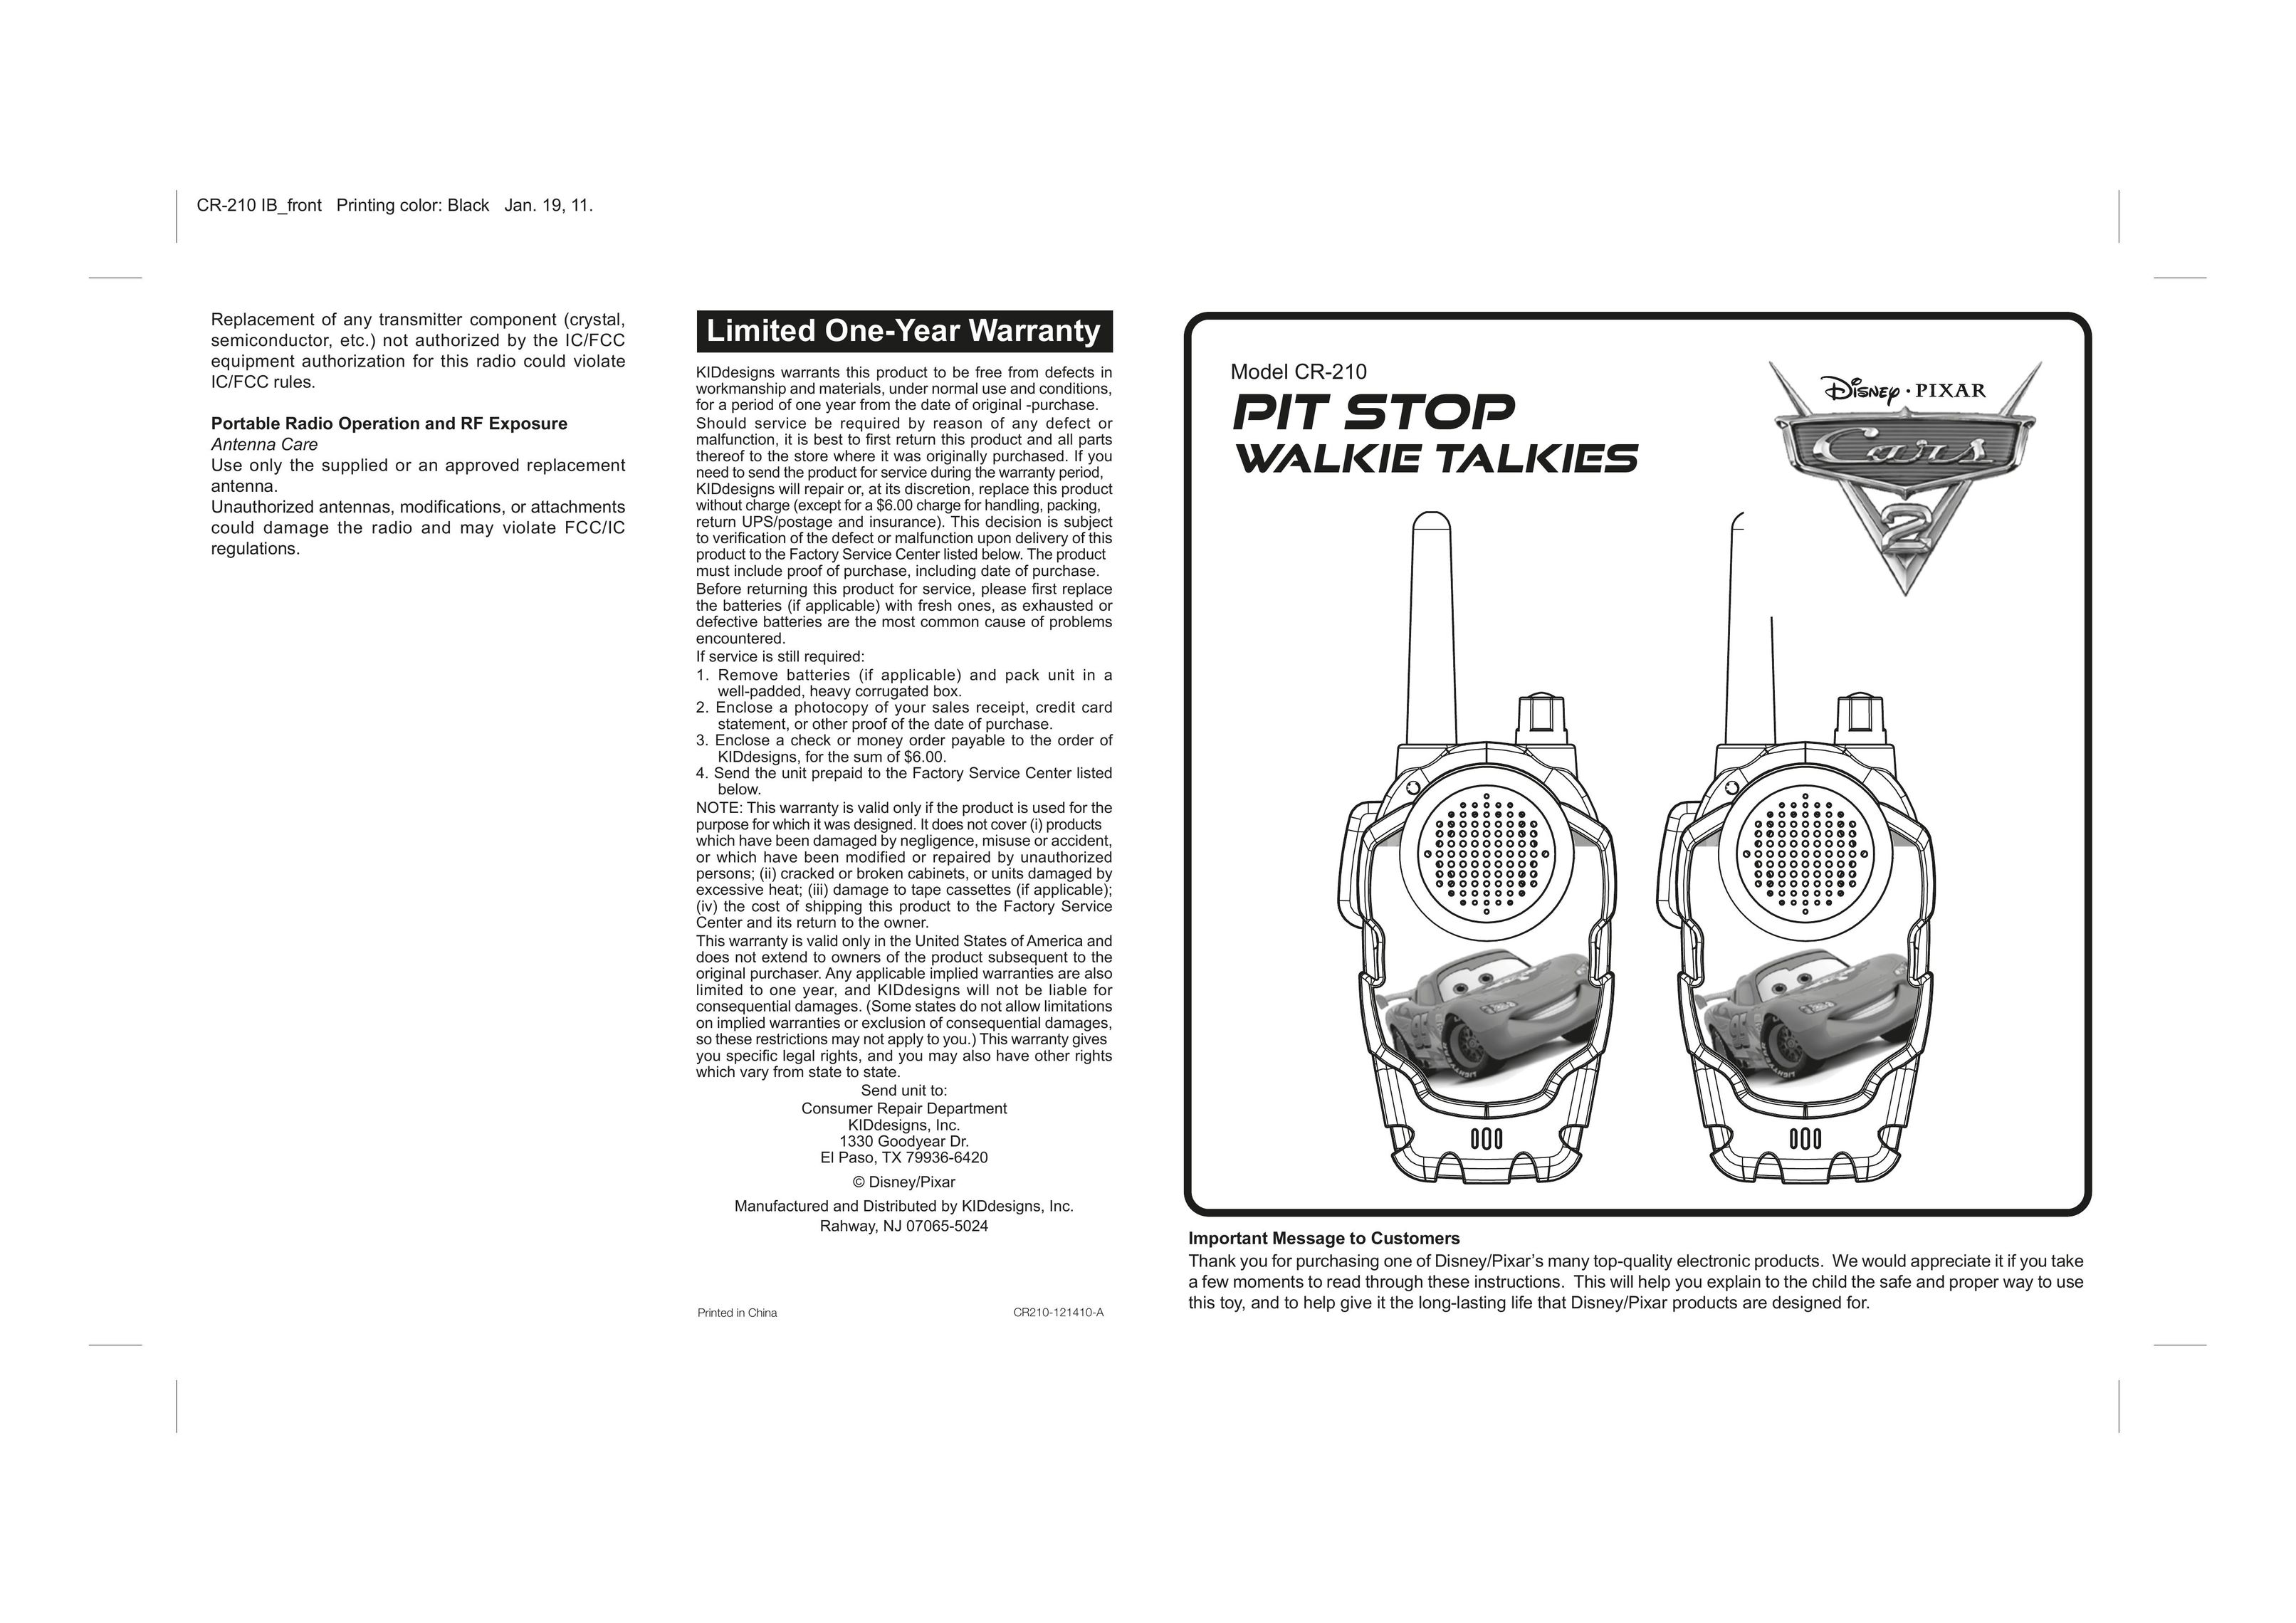 Disney CR-210 Two-Way Radio User Manual